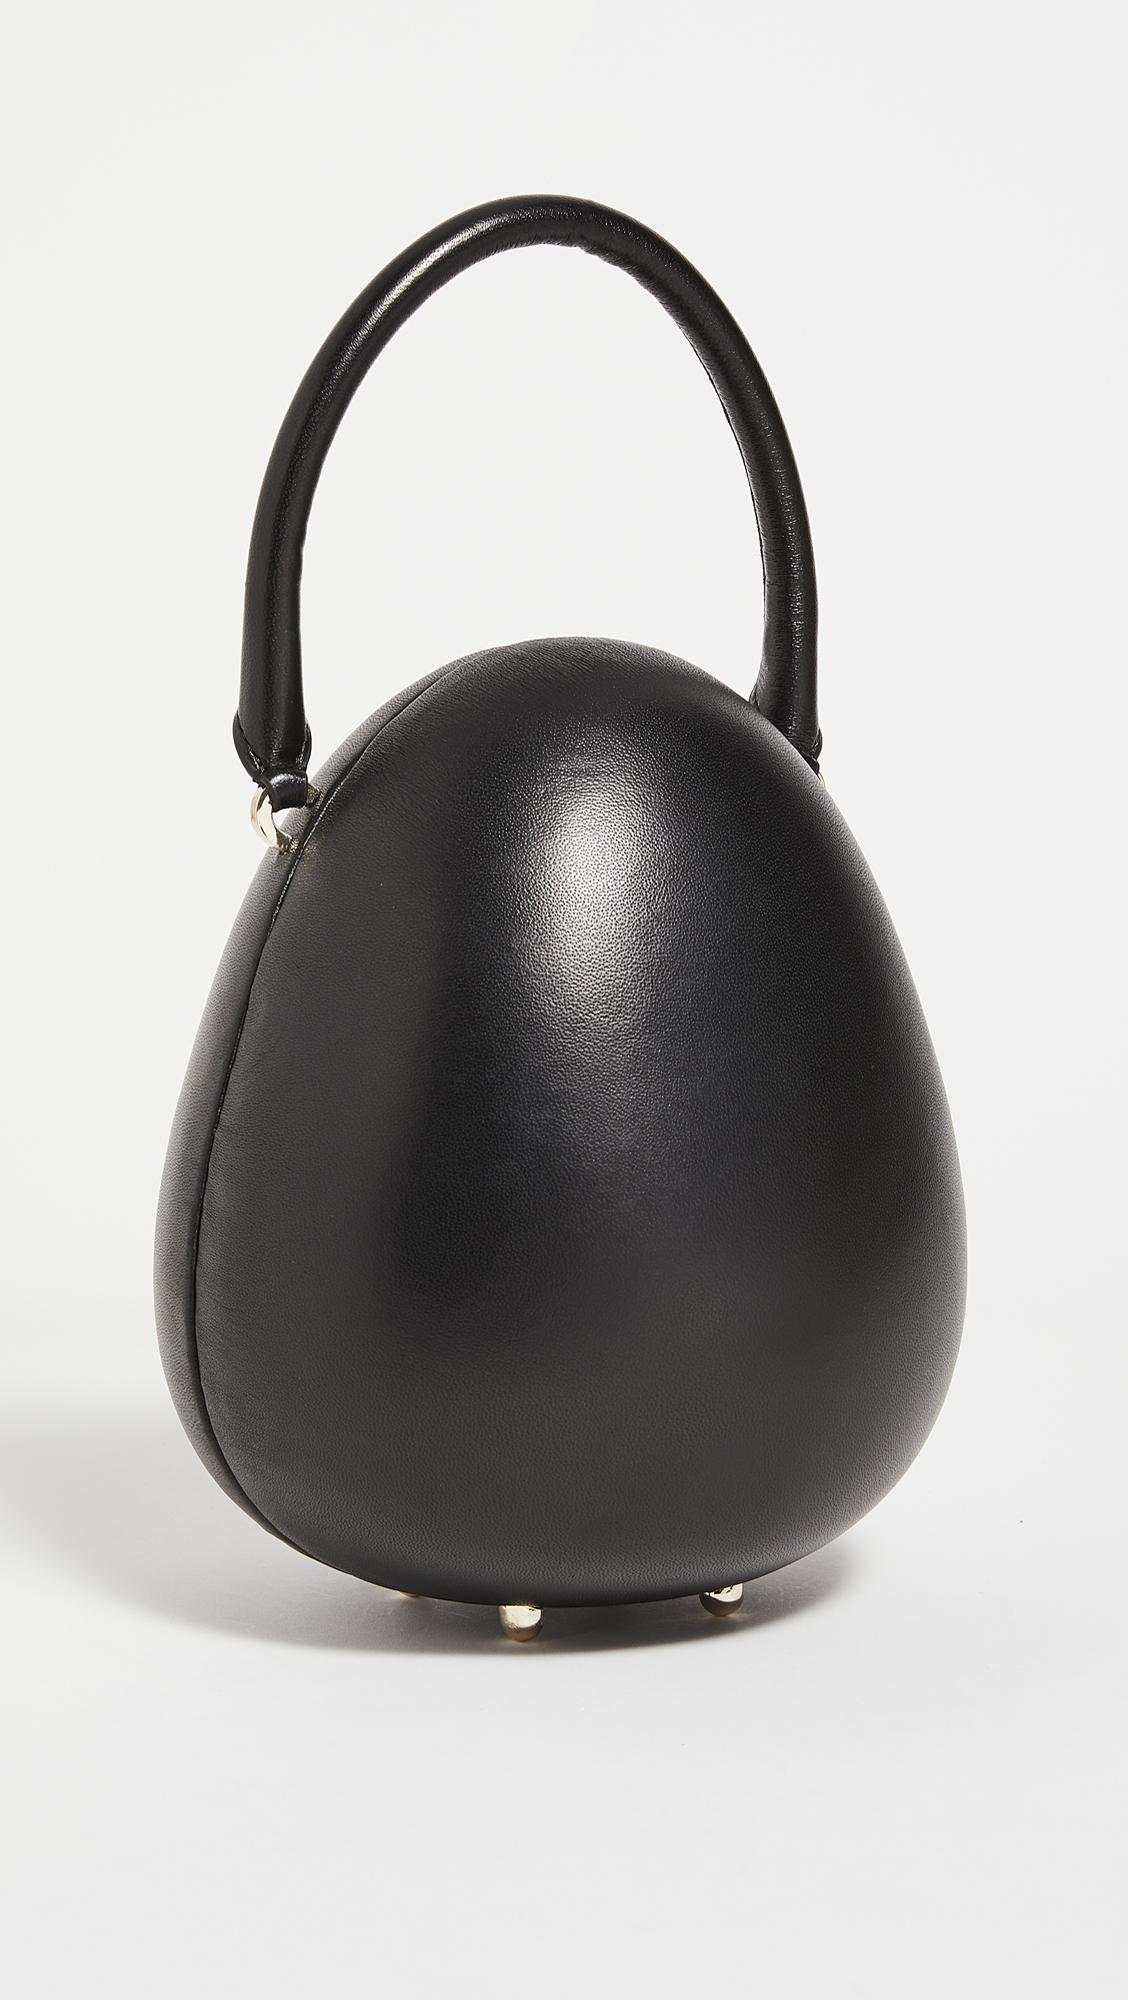 Simone Rocha Leather Egg Bag in Black